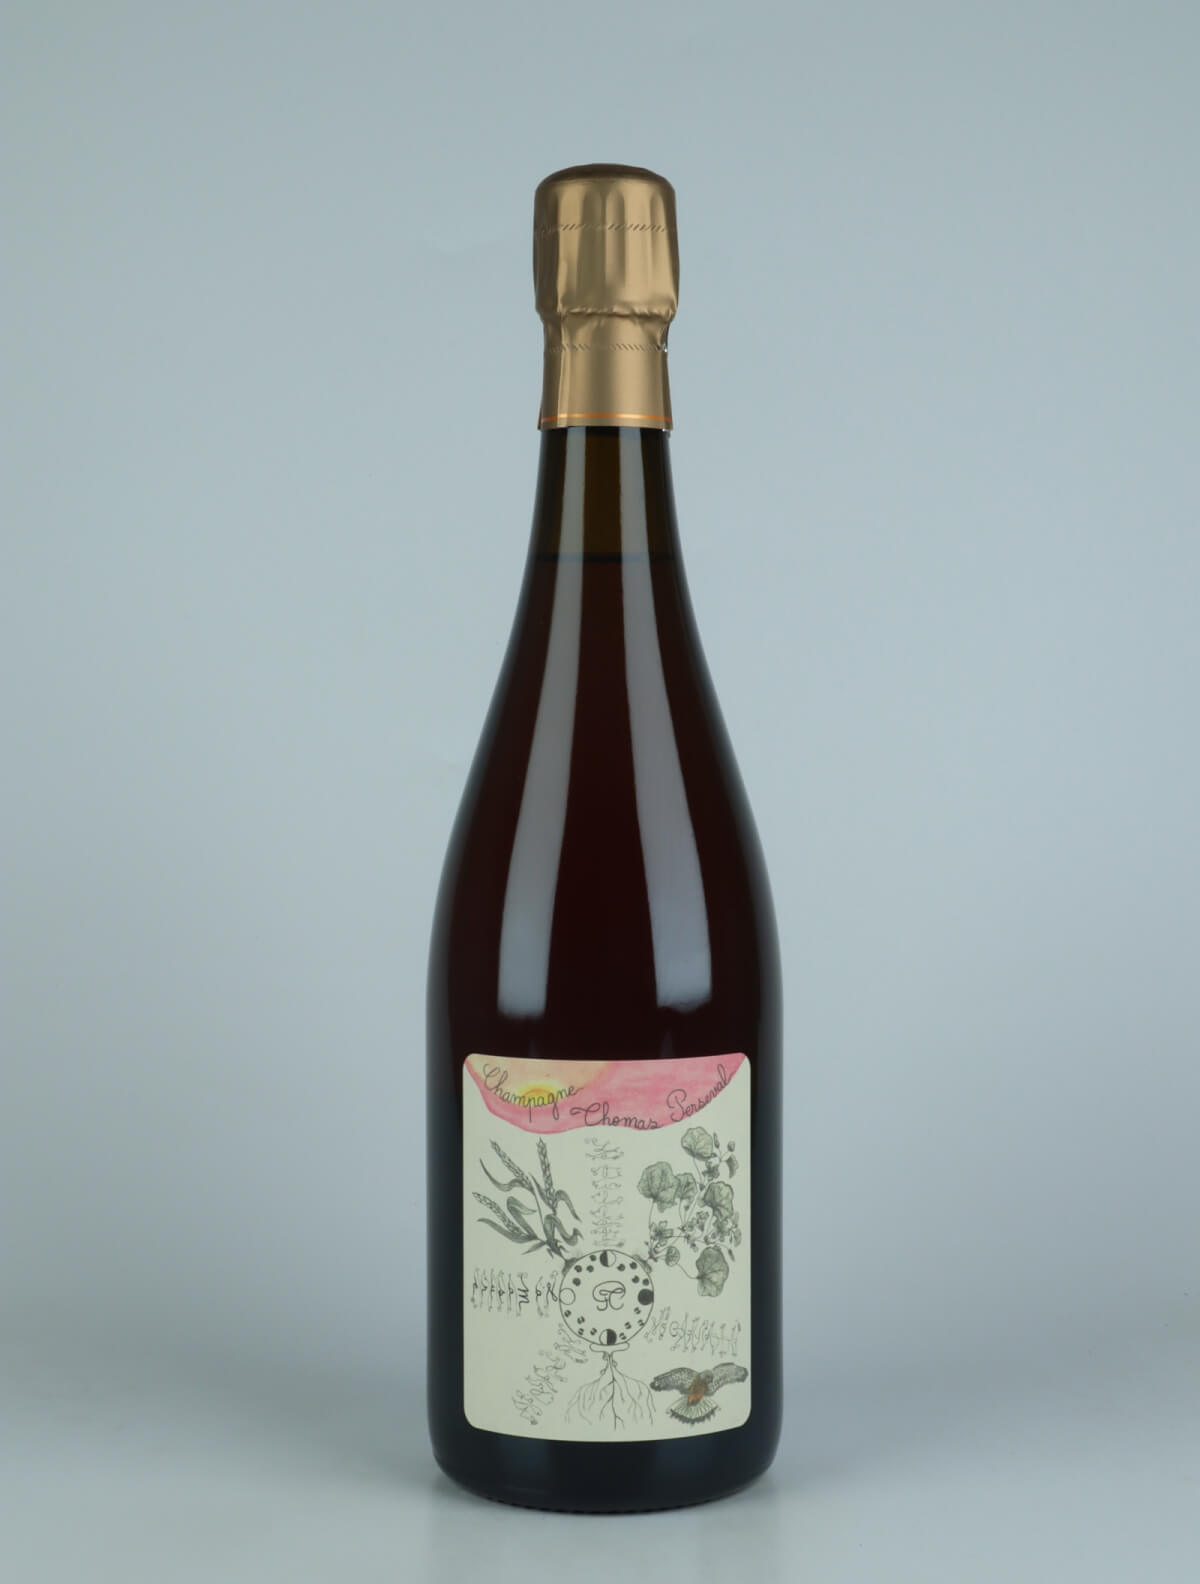 A bottle 2020 Chamery 1. Cru - La Masure - Rosé de macération Sparkling from Thomas Perseval, Champagne in France